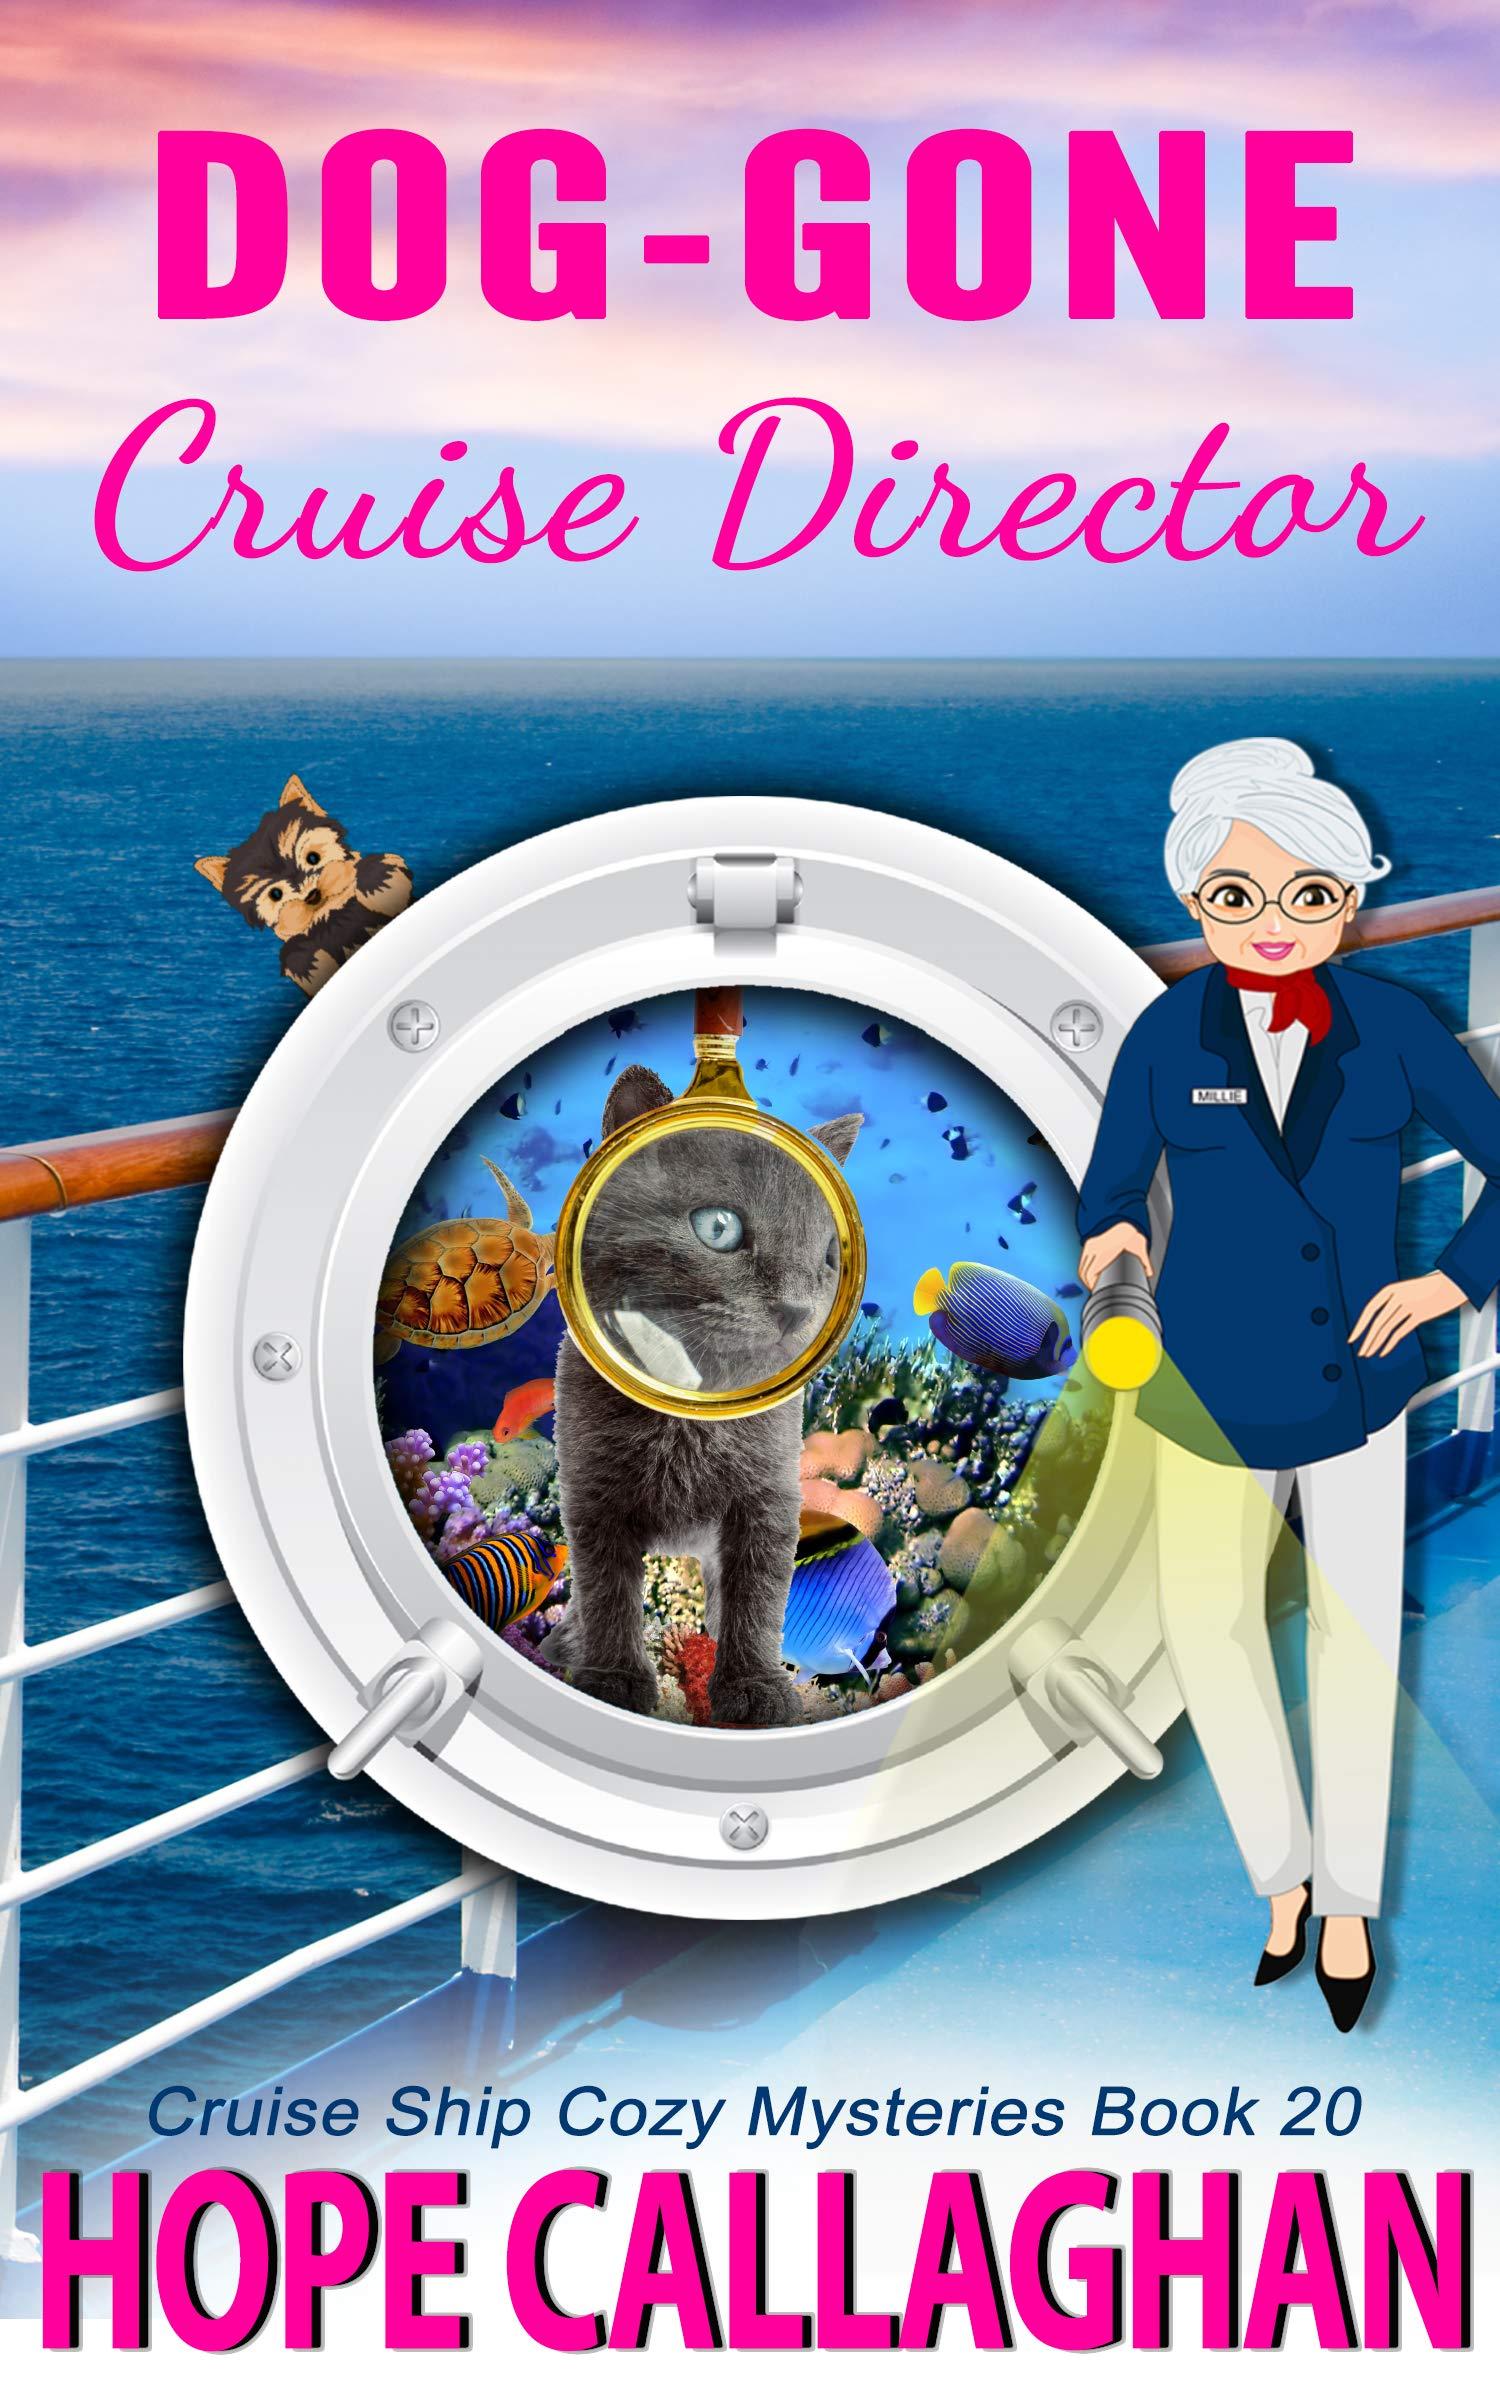 Dog-Gone Cruise Director